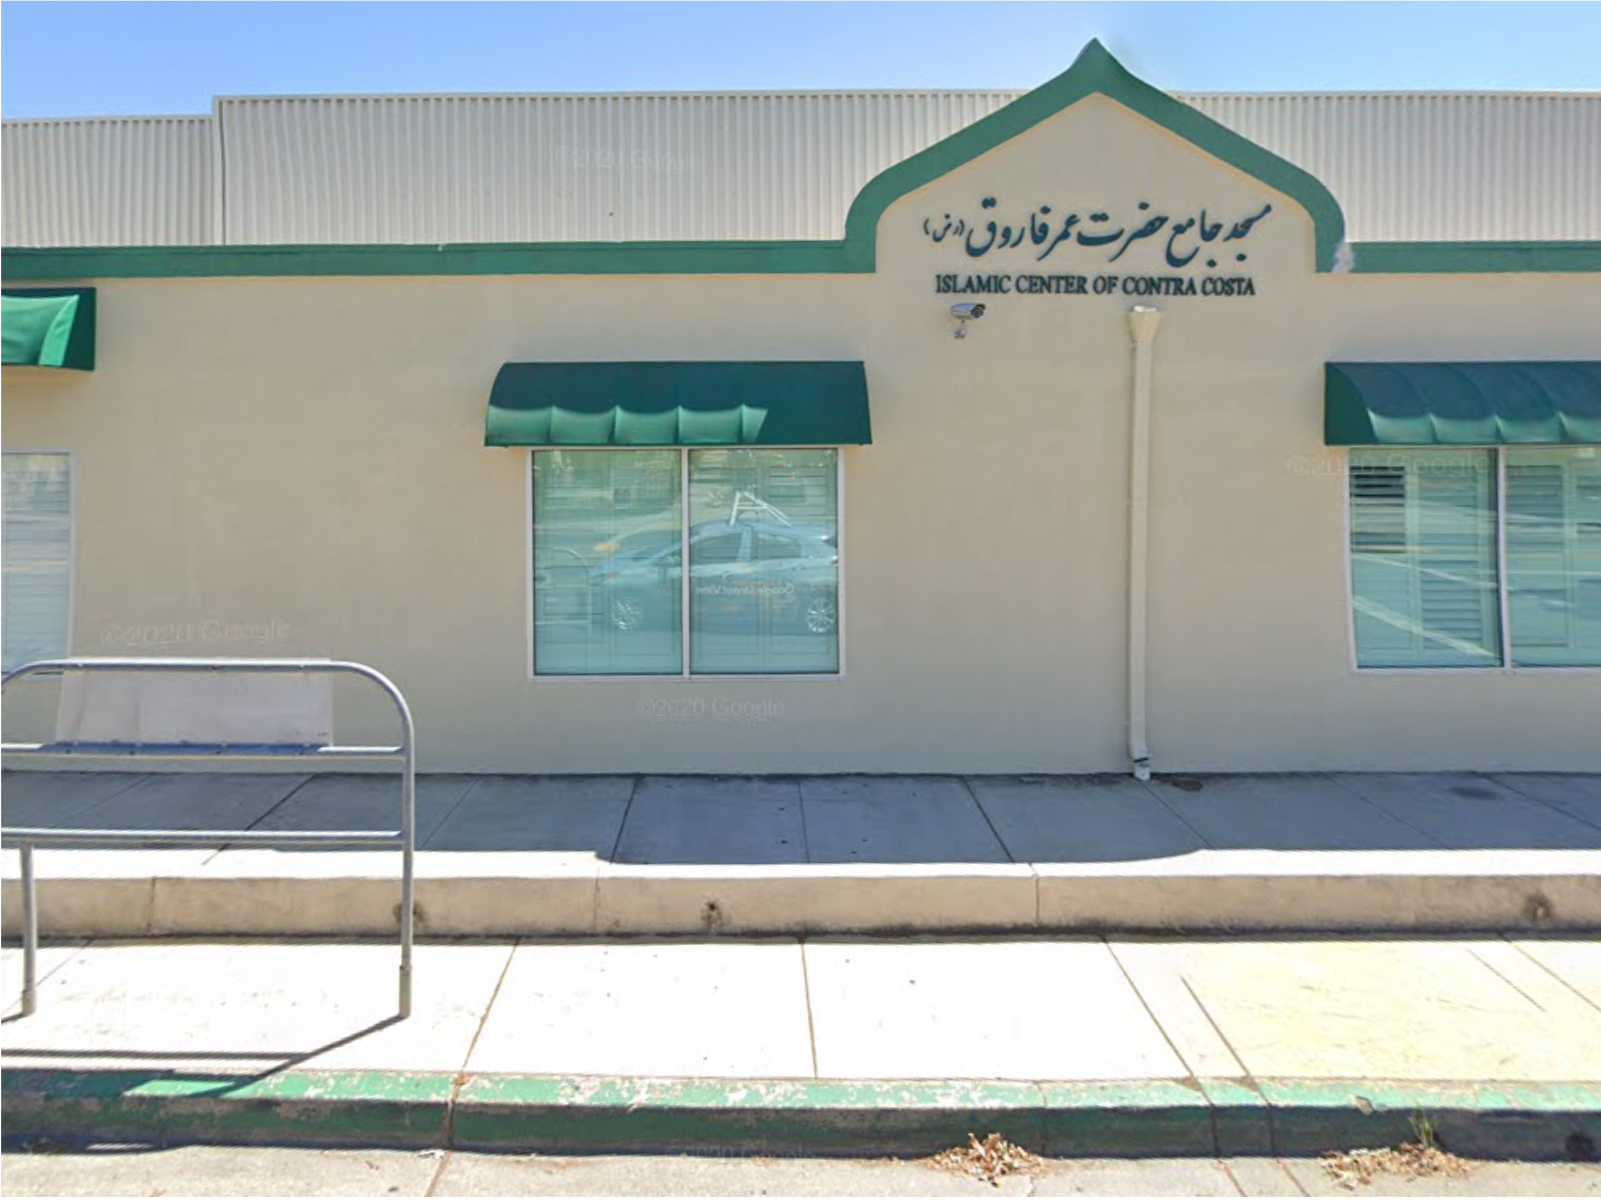 Figure 4.2. Islamic Center of Contra Costa, Concord, California, (icofcc.com), 